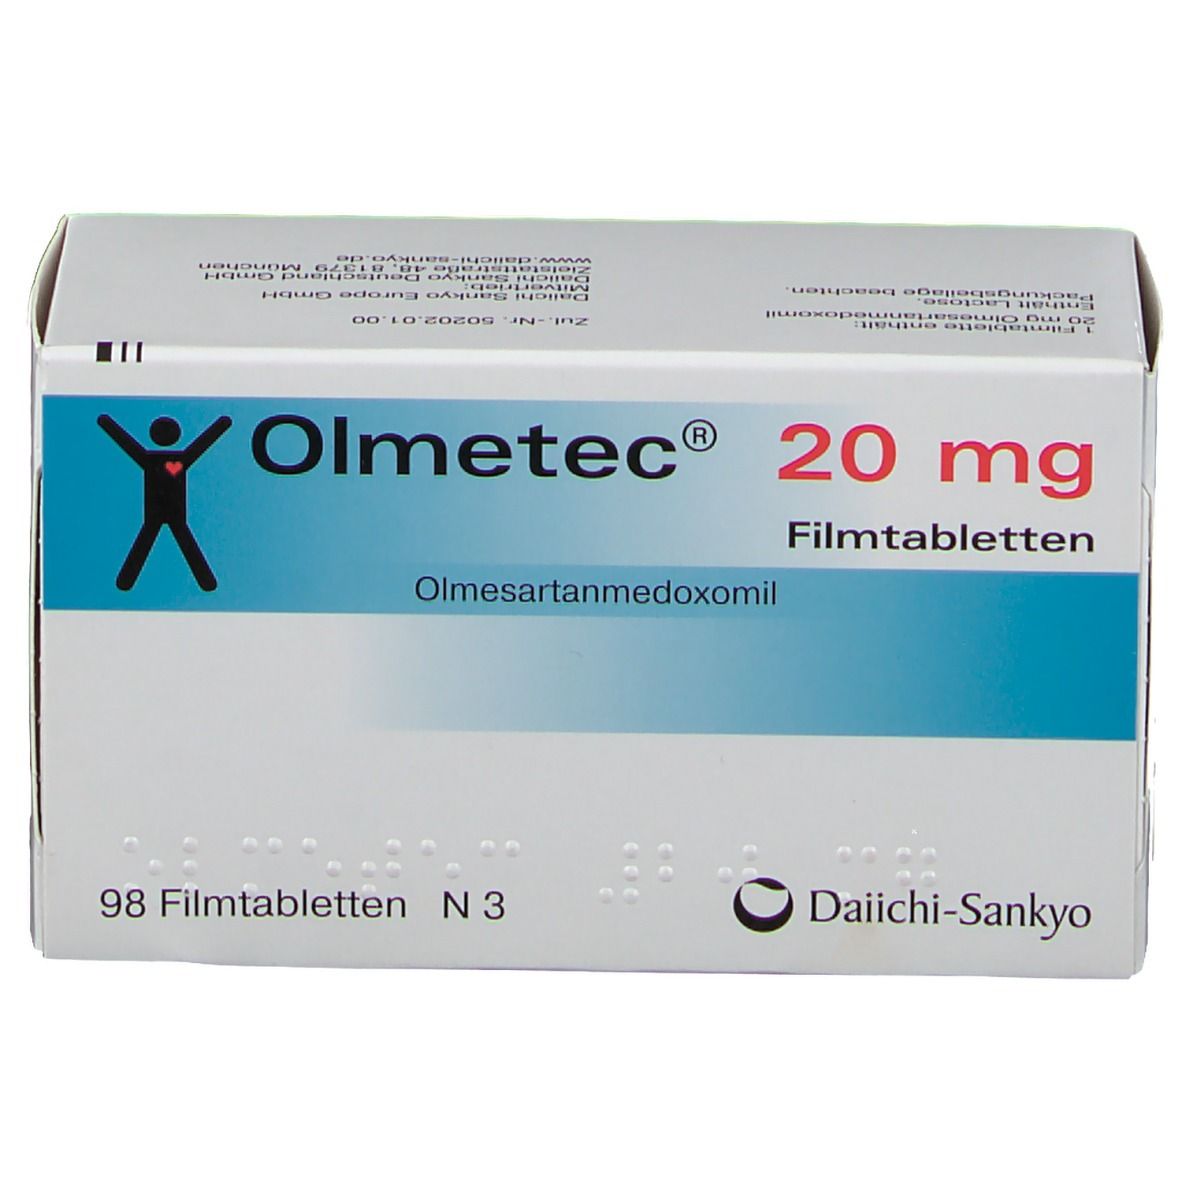 Olmetec® 20 mg